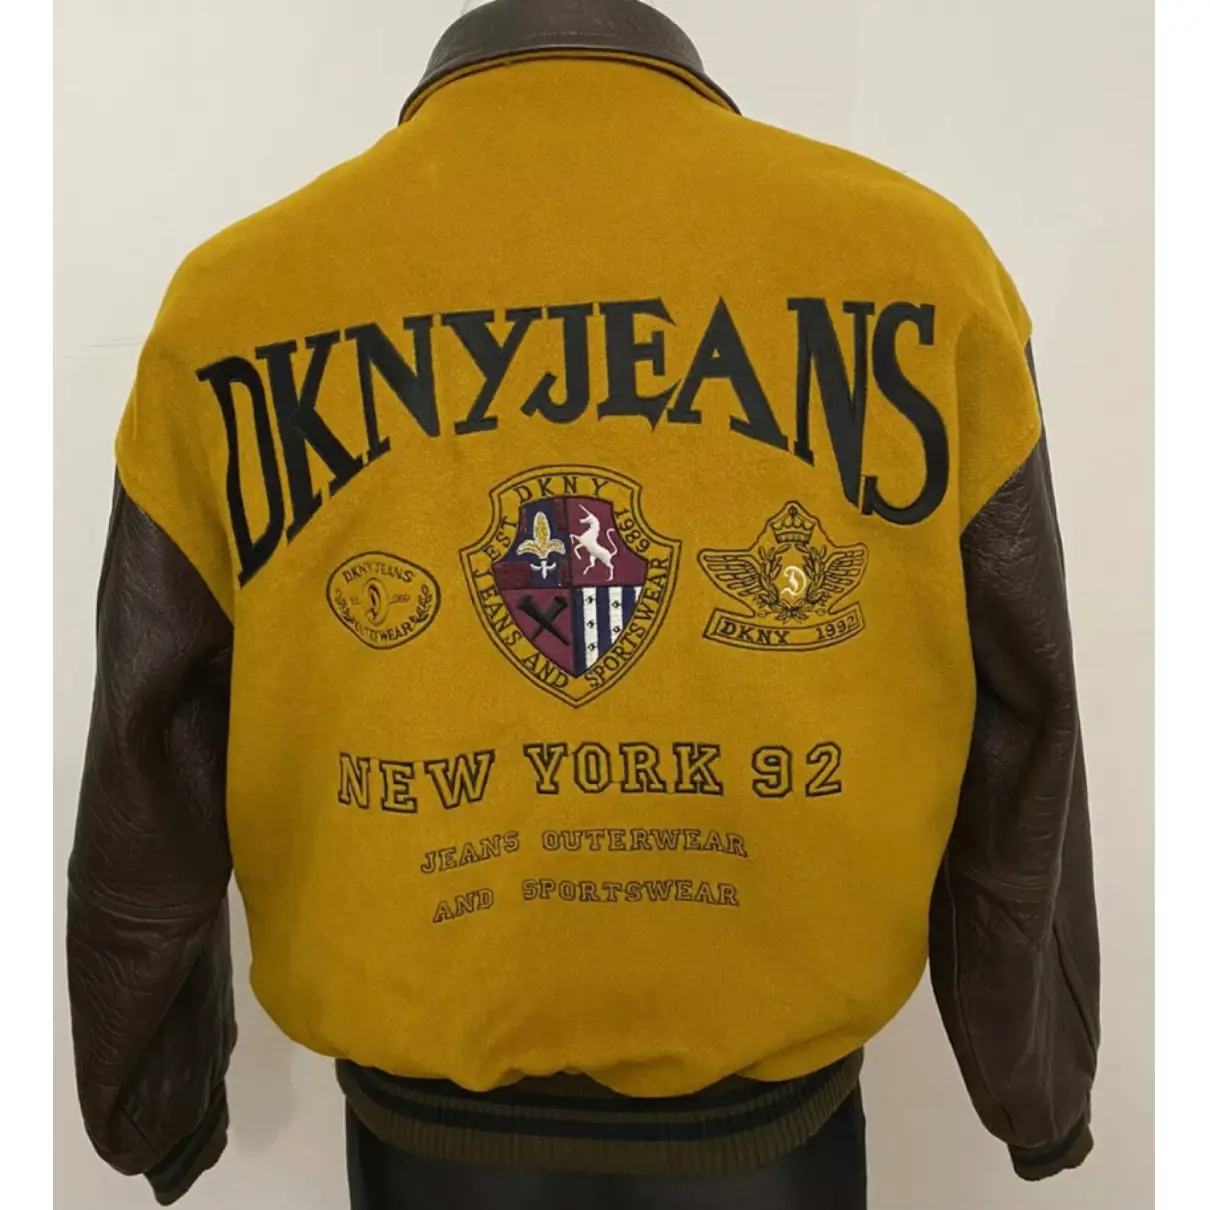 Buy Dkny Wool jacket online